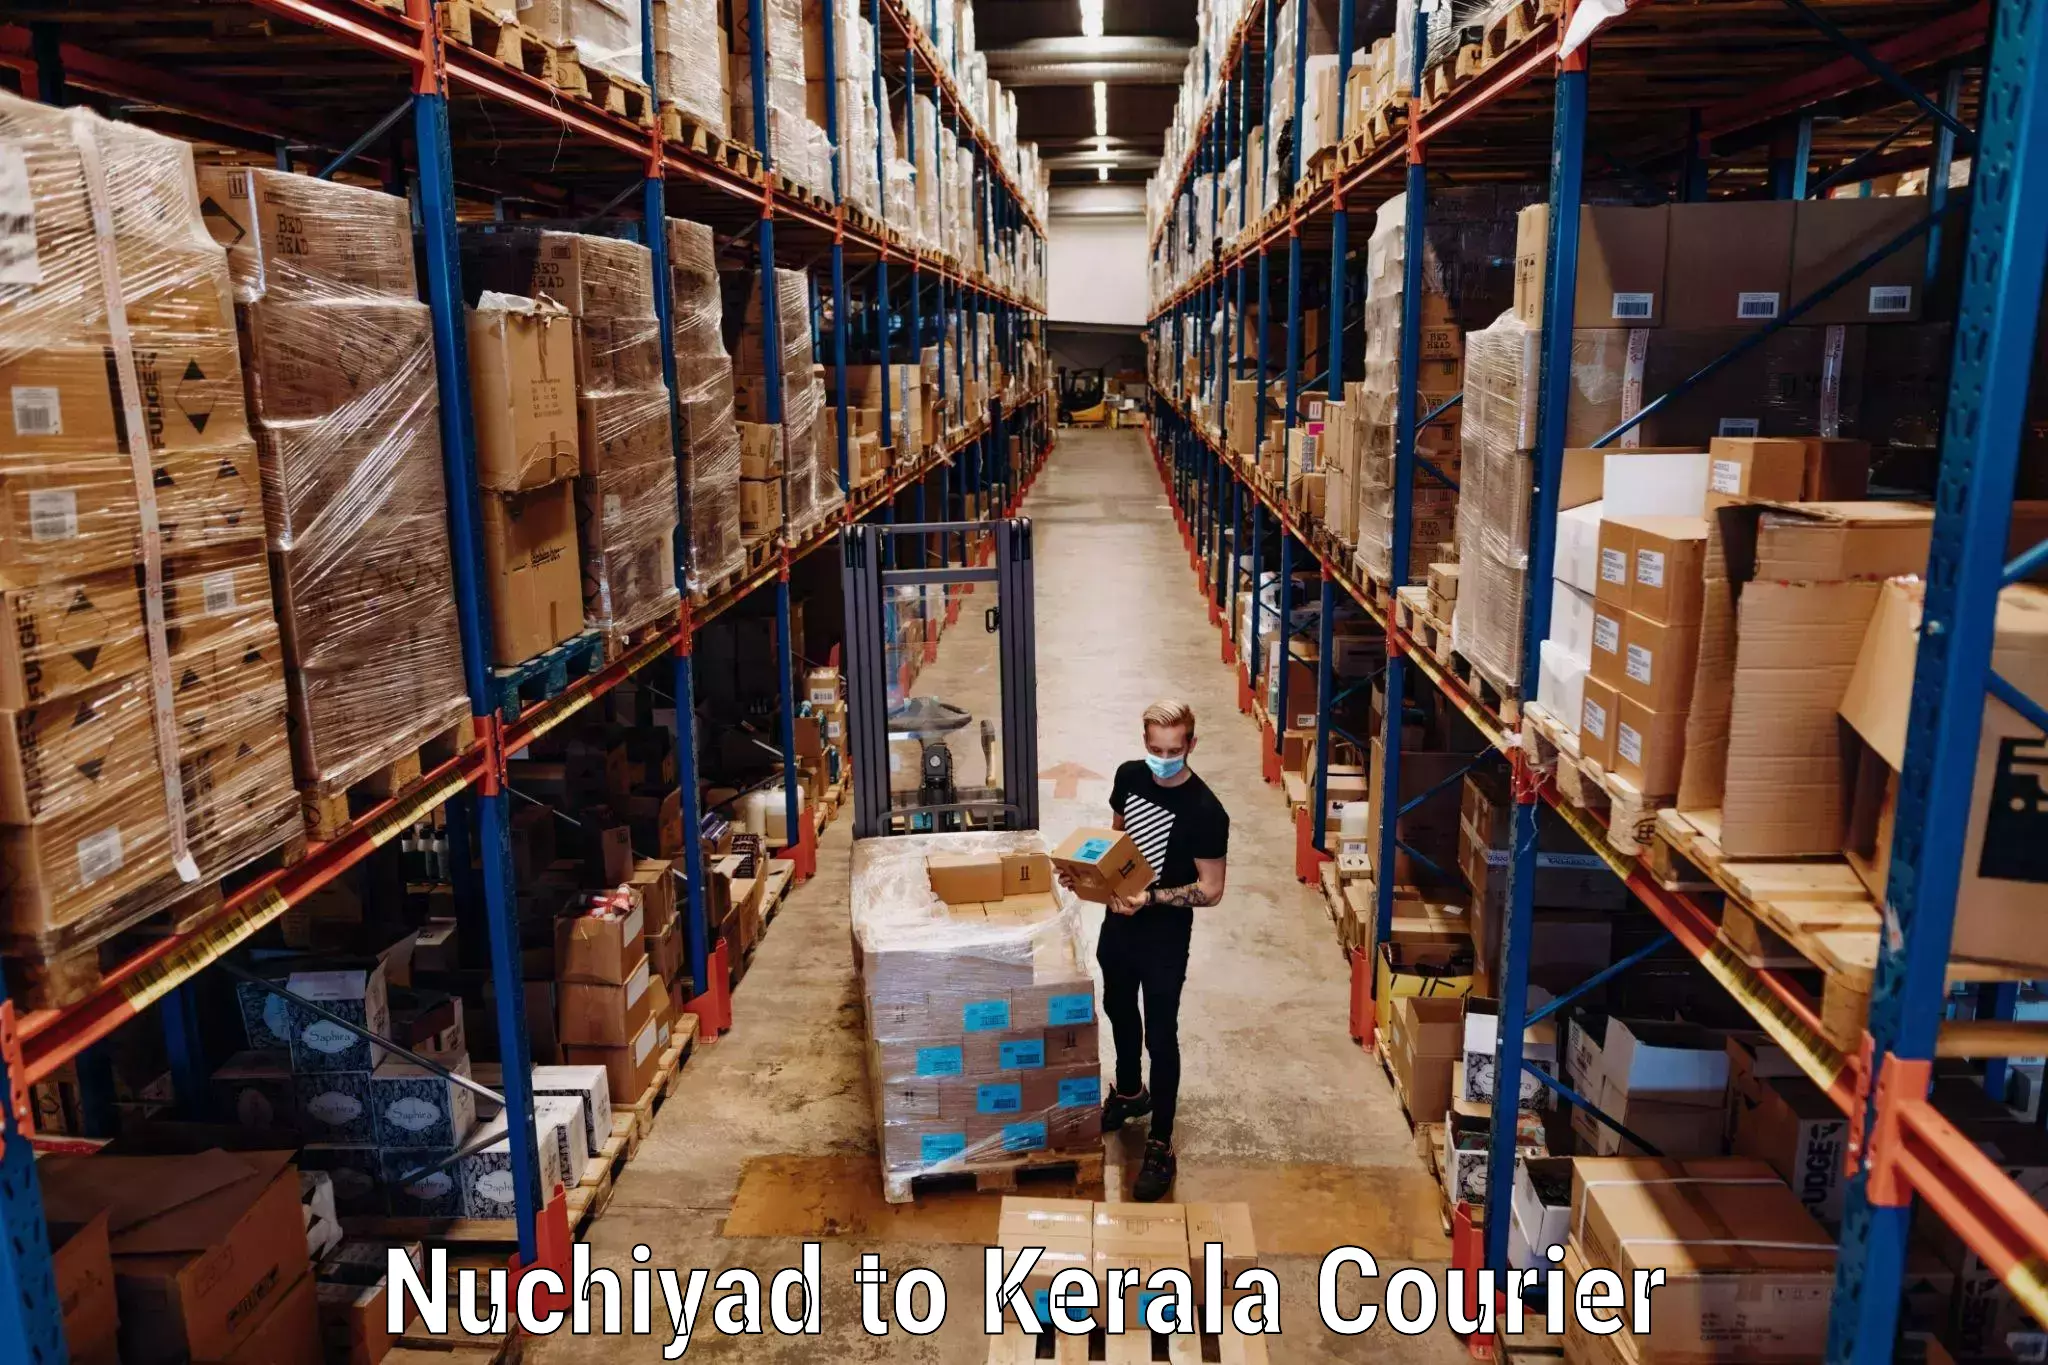 High-quality baggage shipment Nuchiyad to Cochin Port Kochi